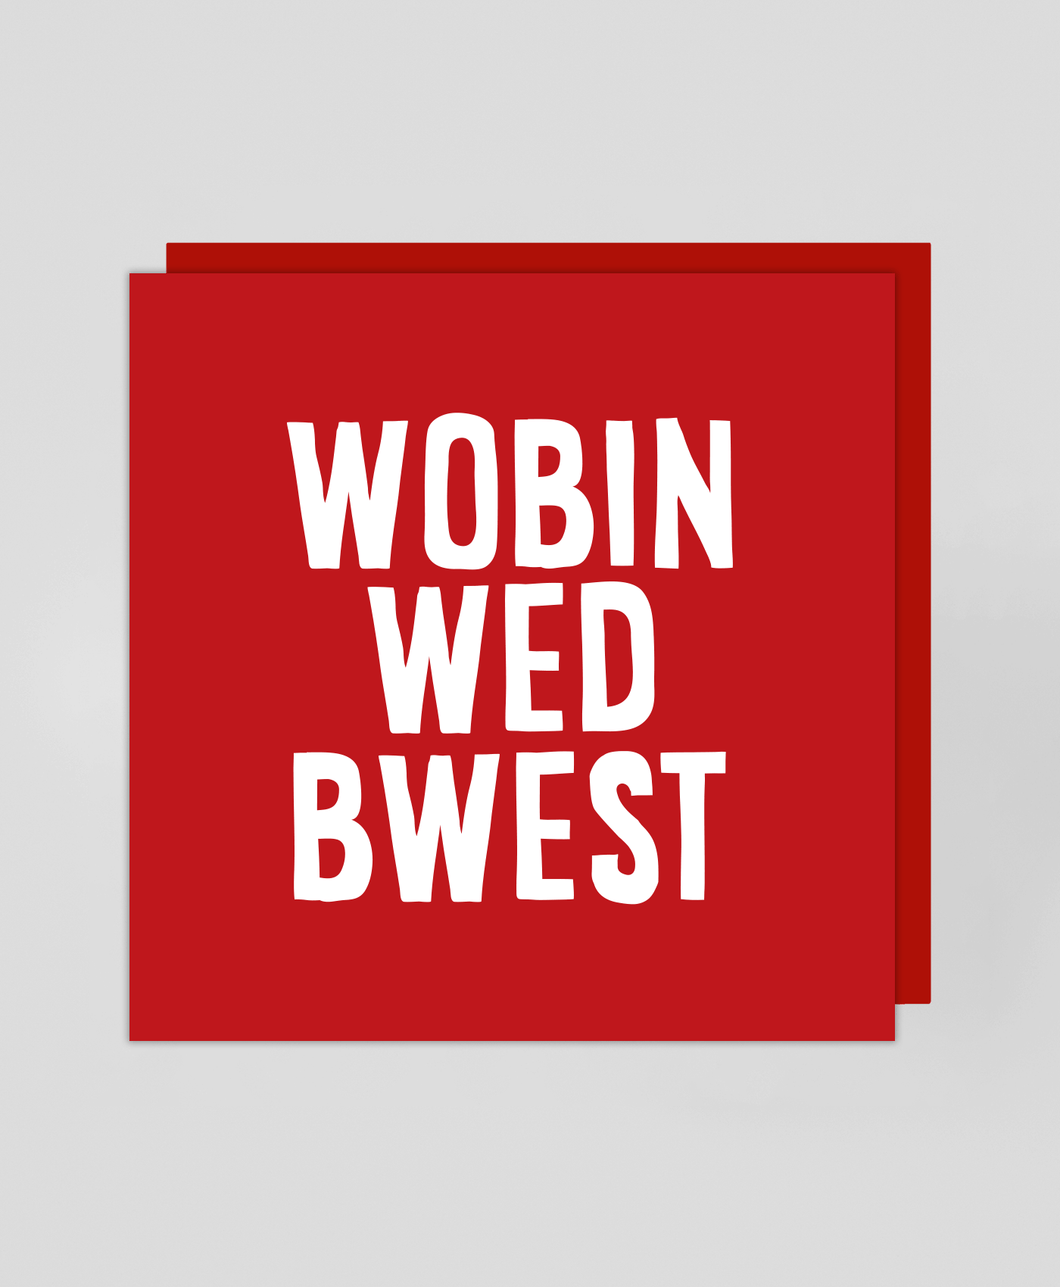 Wobin Wed Bwest